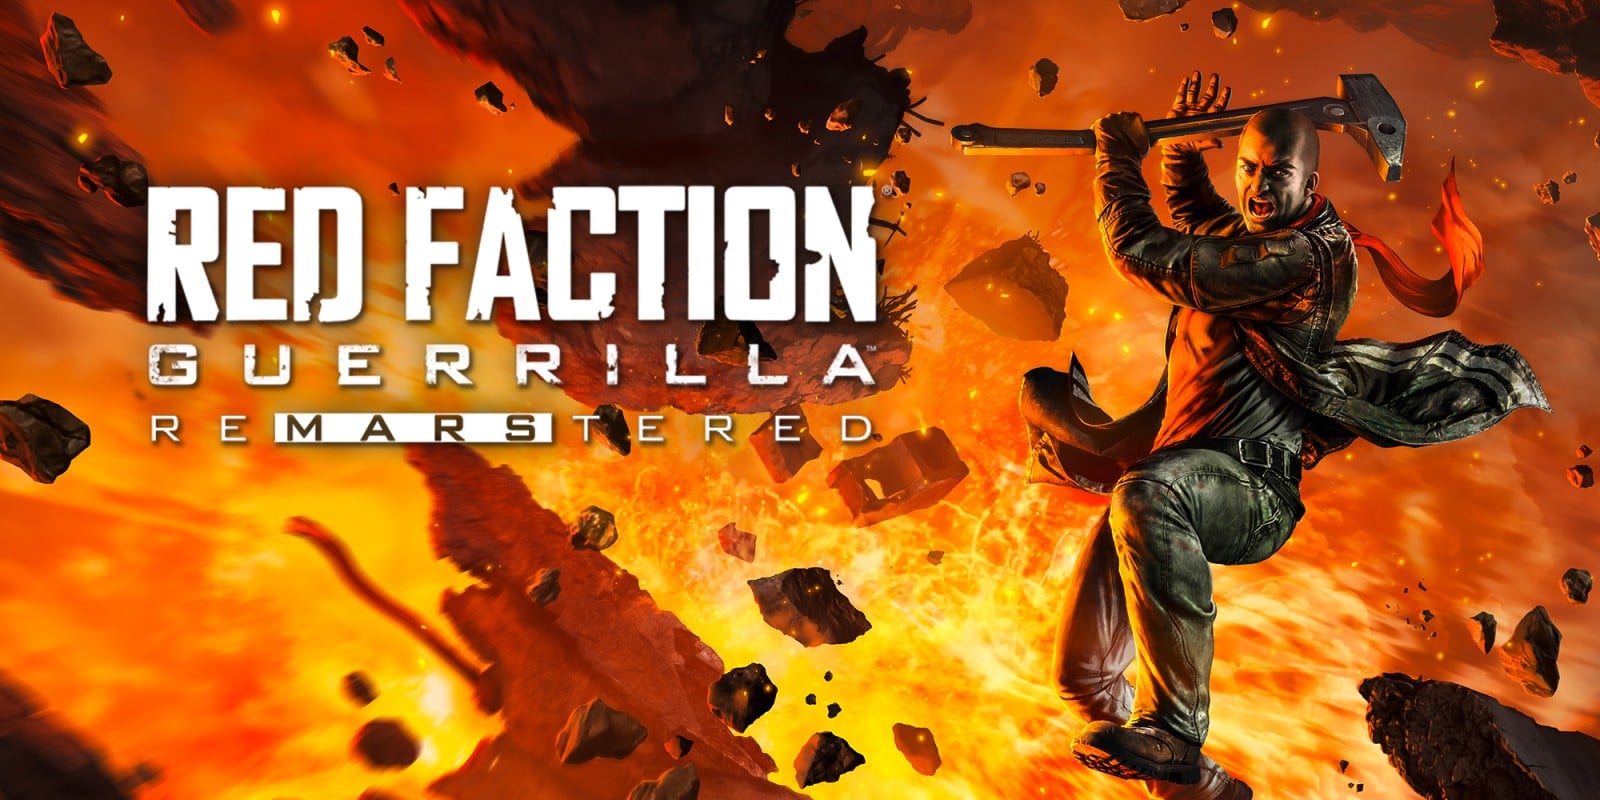 Red Faction Guerrilla Re-Mars-tered , GamersRD